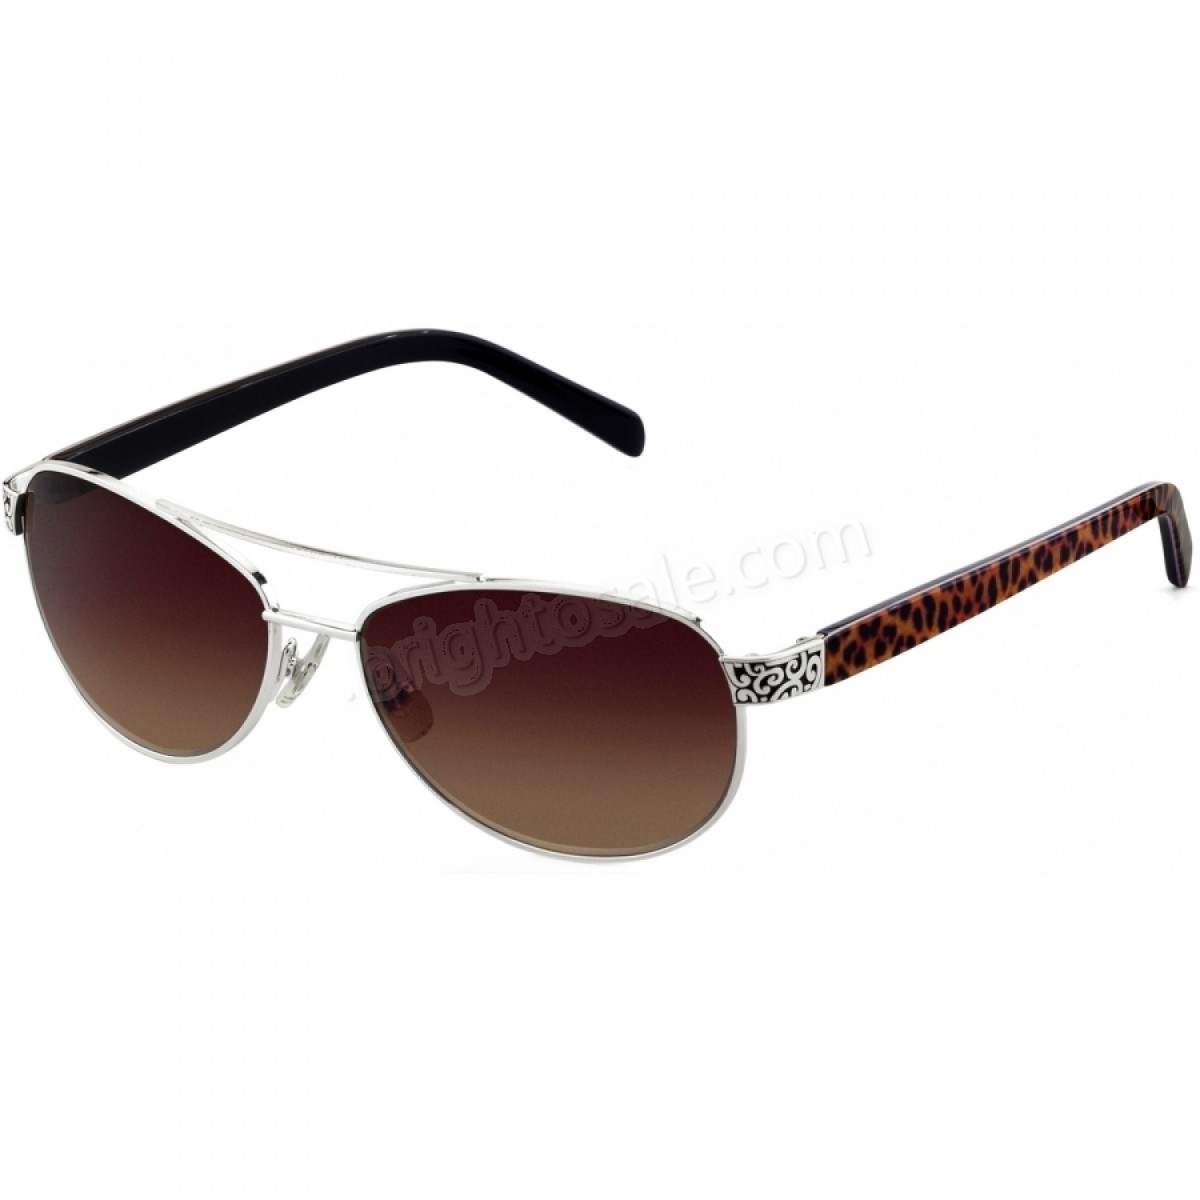 Brighton Collectibles & Online Discount Ferrara Sunglasses - -3